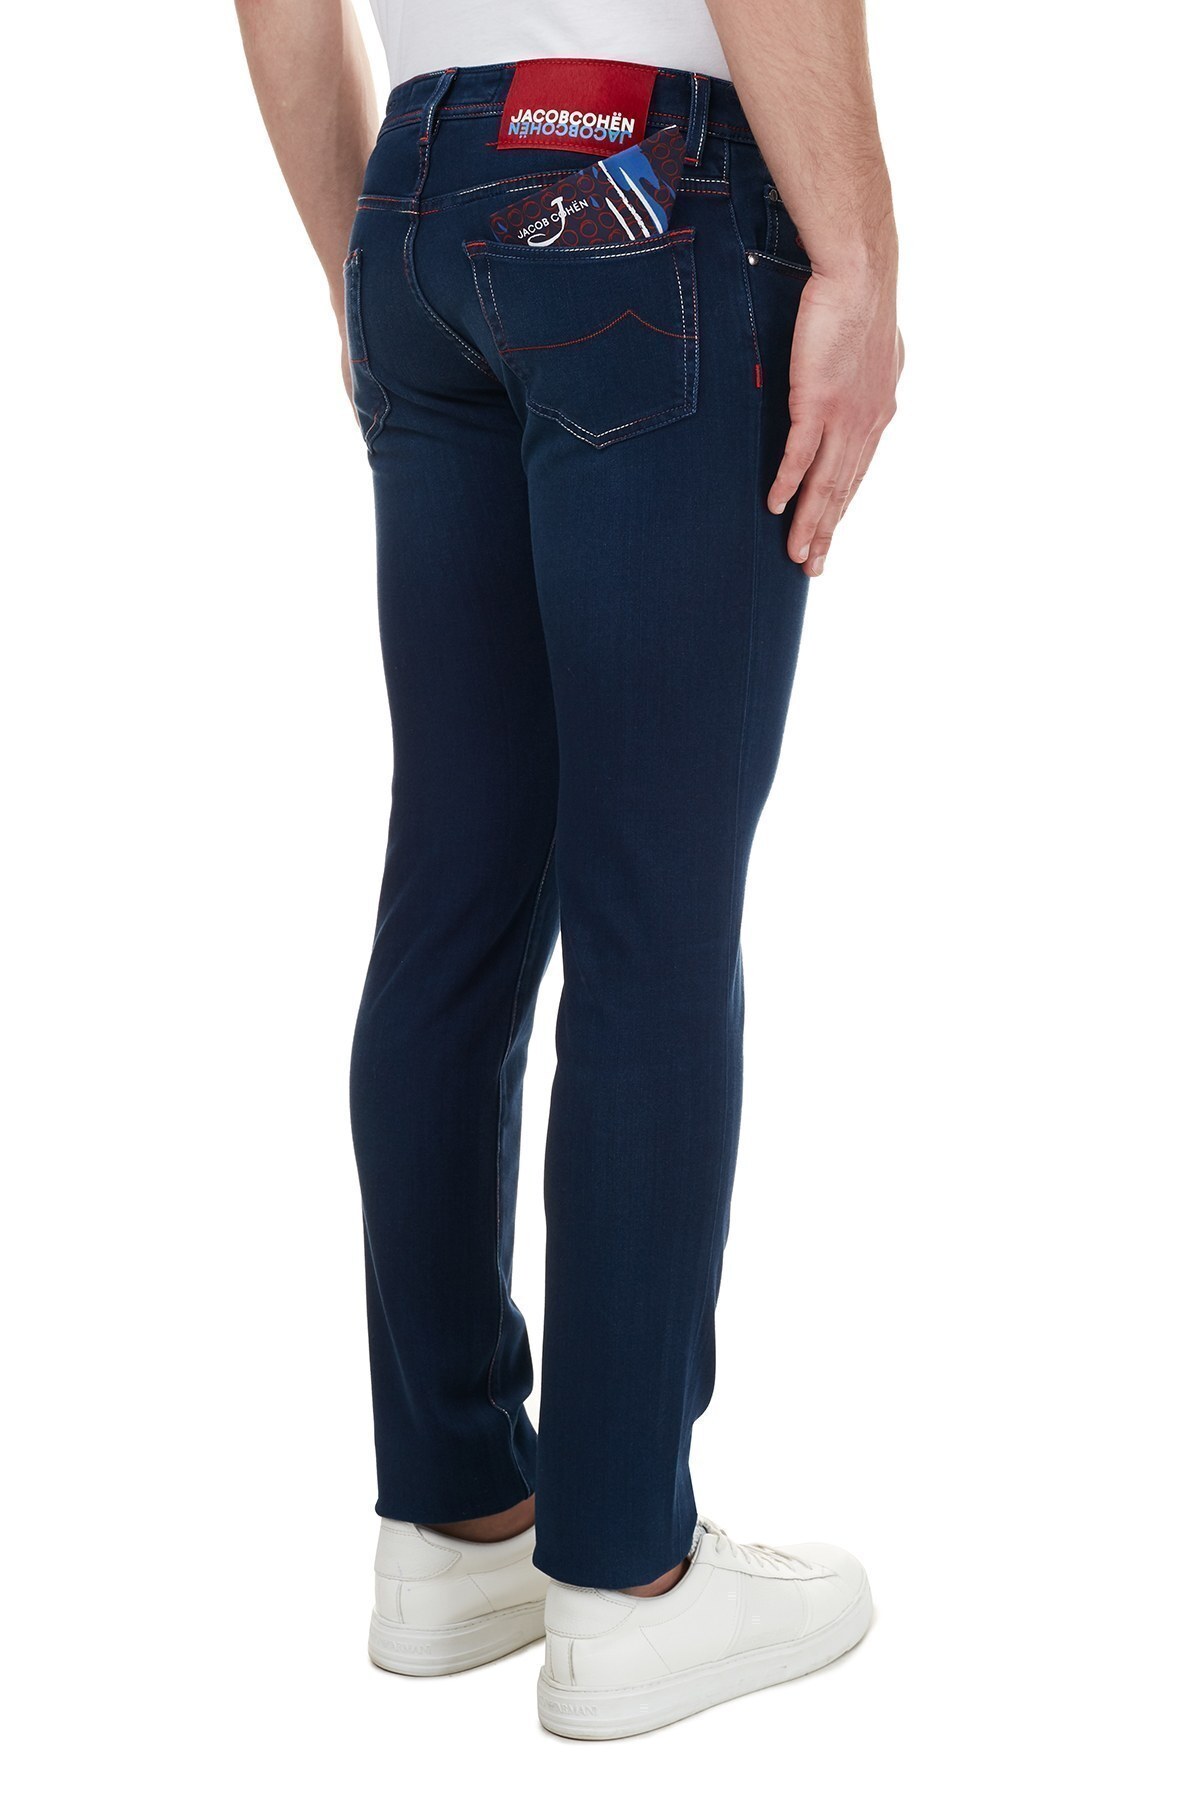 Jacob Cohen Slim Fit Jeans Erkek Kot Pantolon J622 SLIM 02048W2 LACİVERT